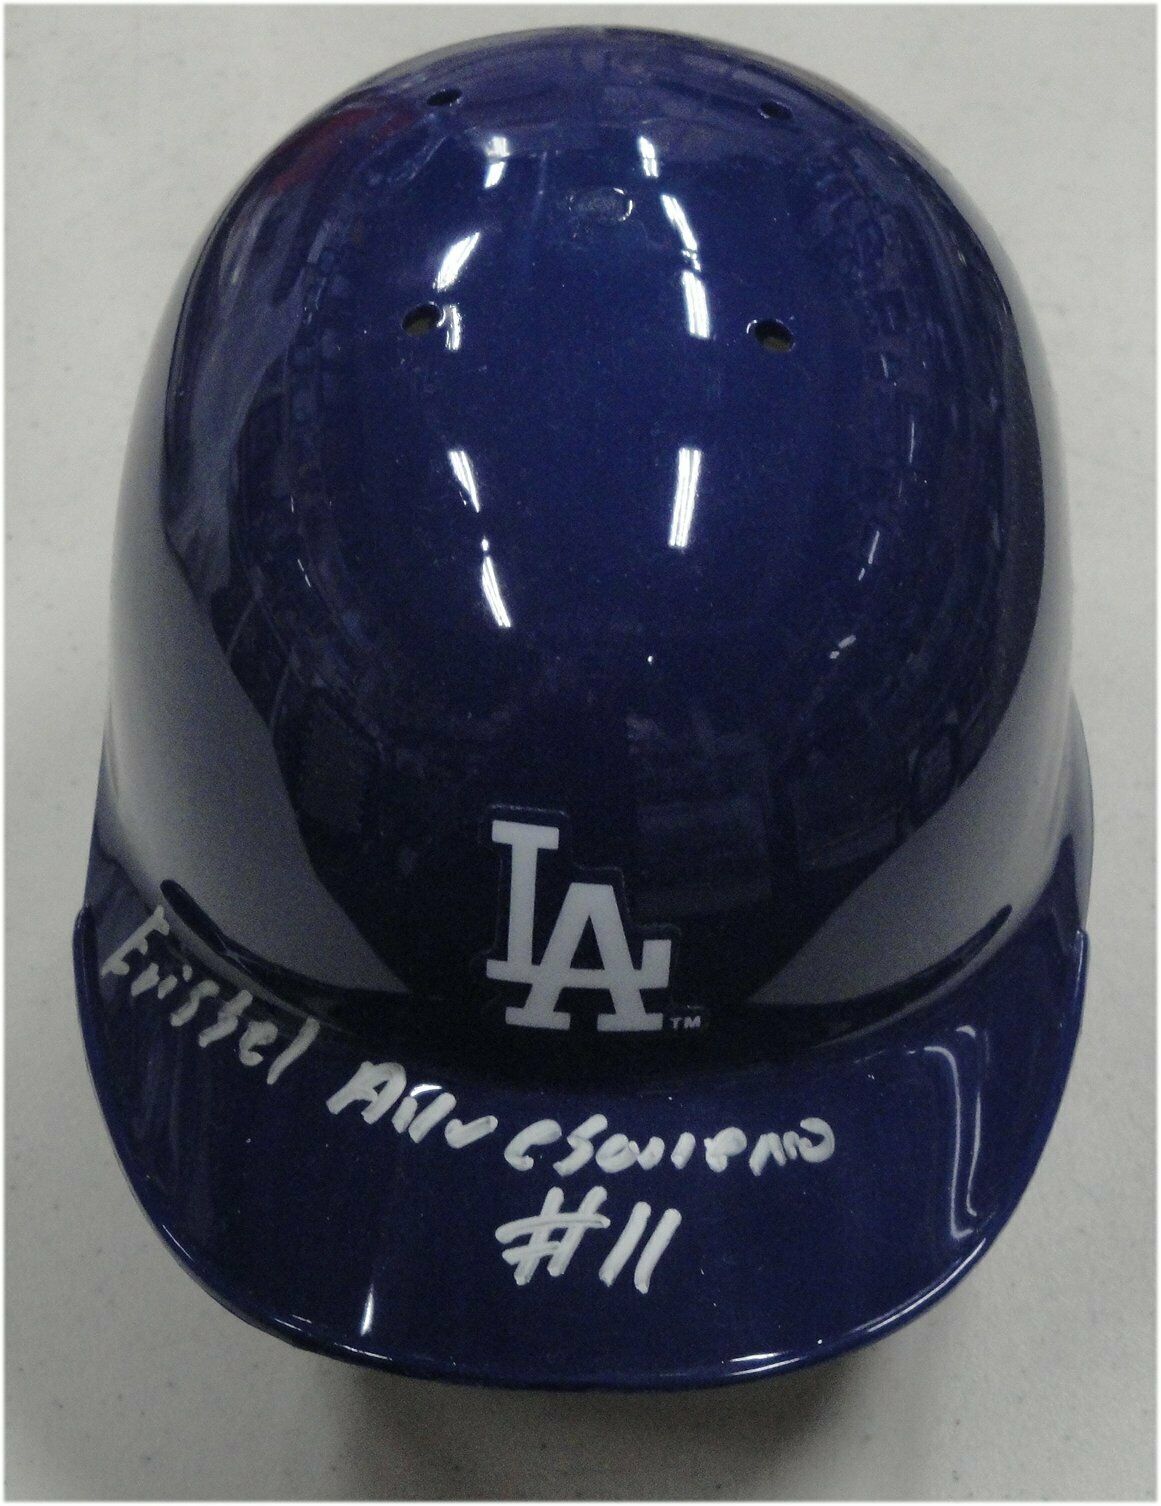 Erisbel Arruebarrena Signed Autograph Major League Baseball Mini Helmet W/ Coa